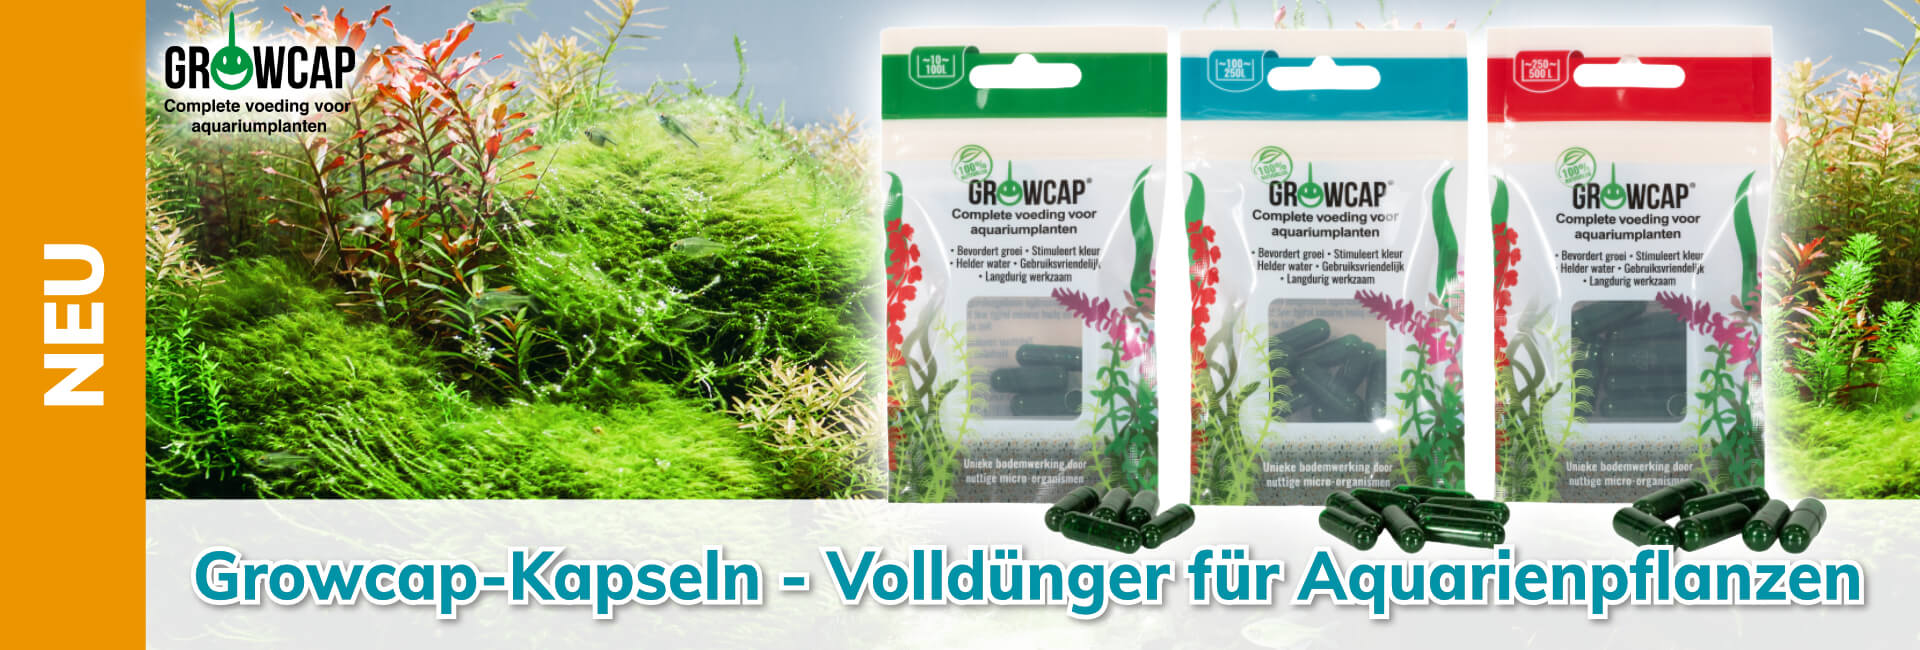 Growcap-Kapseln - Volldünger für Aquarienpflanzen